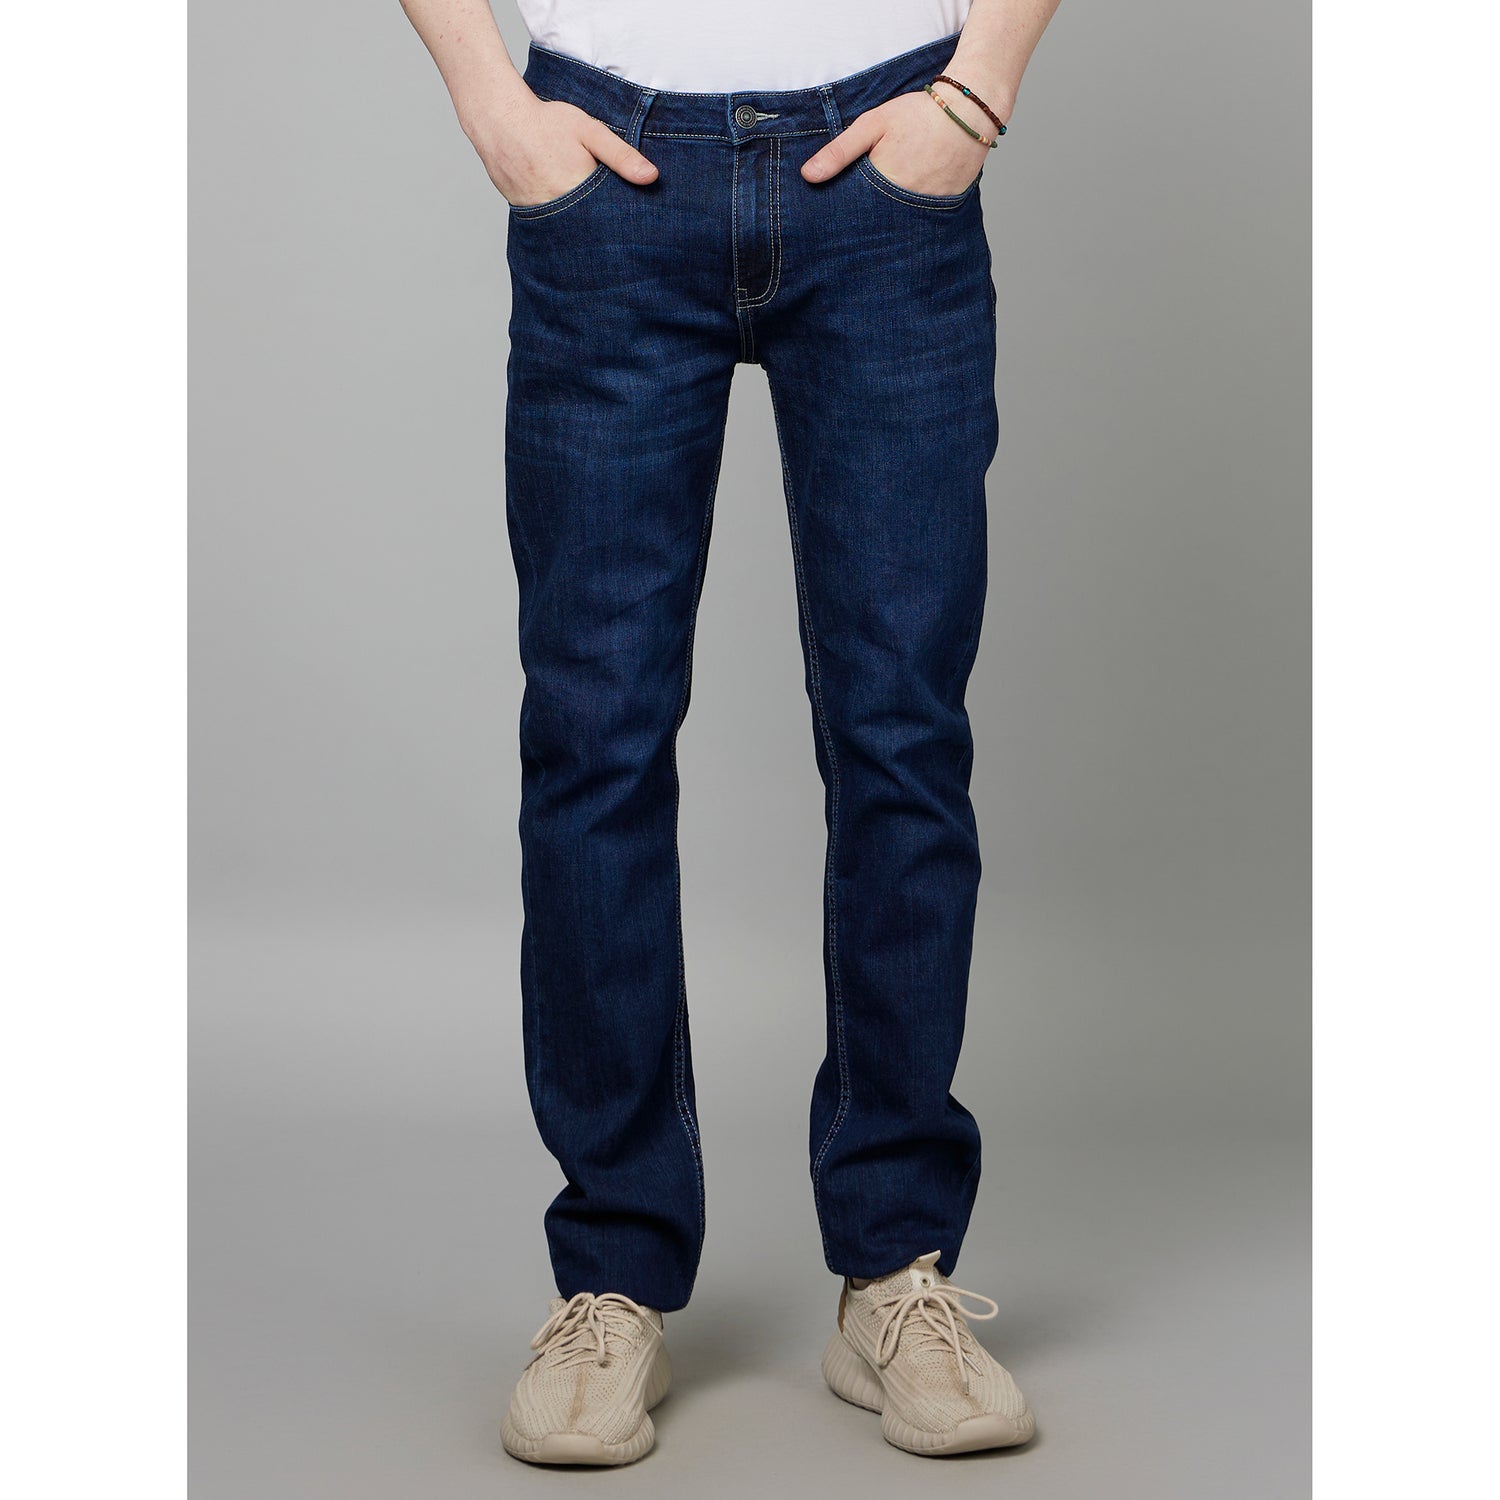 Navy Blue Slim Fit Clean Look Light Fade Jeans (DOBASESTL)